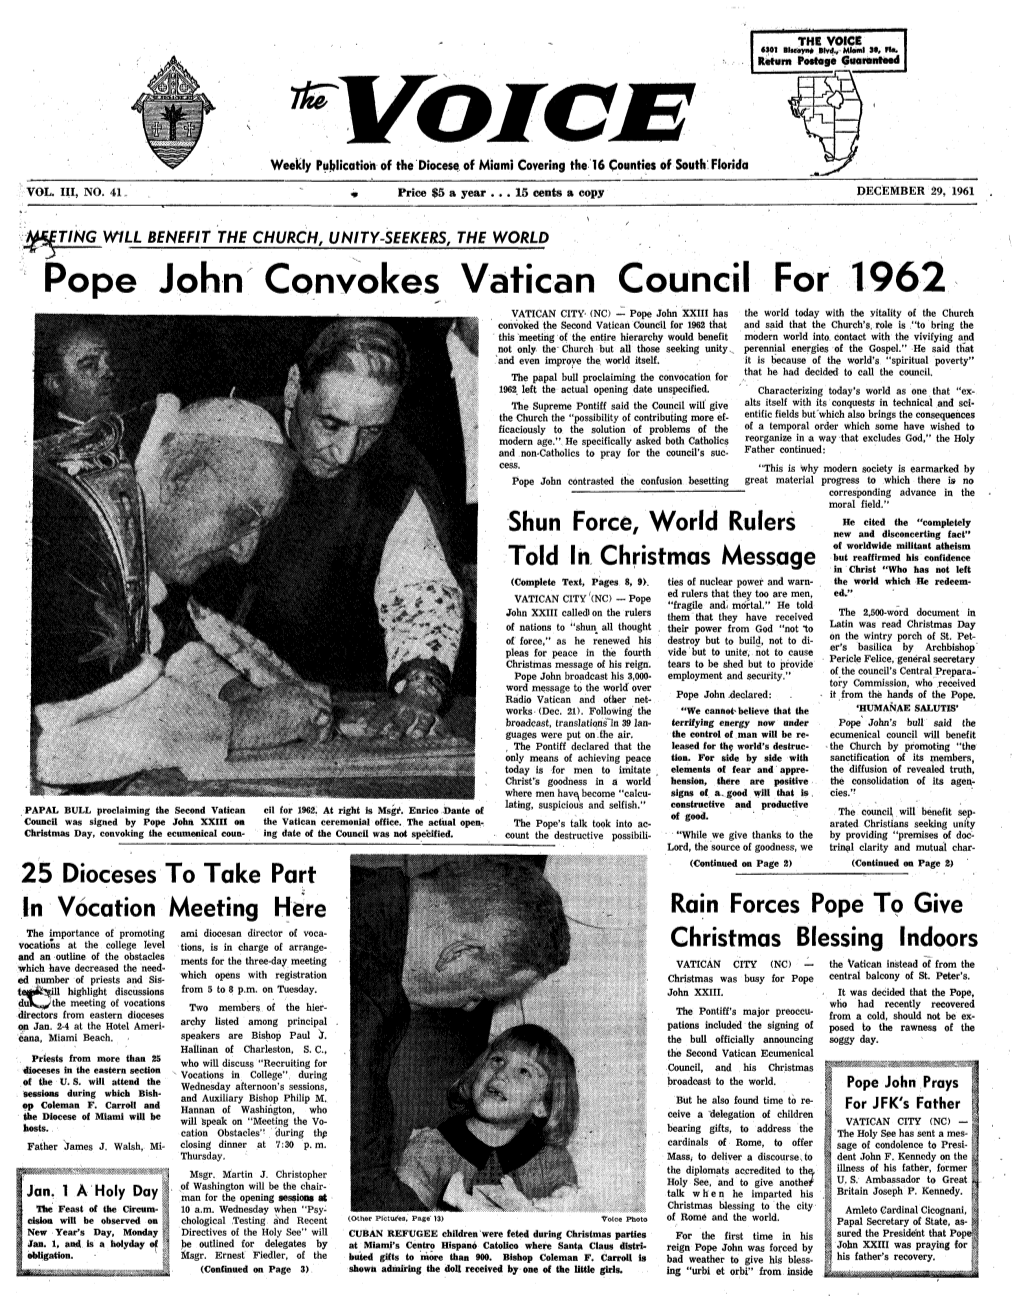 Pope John Convokes Vatican Council for 1962